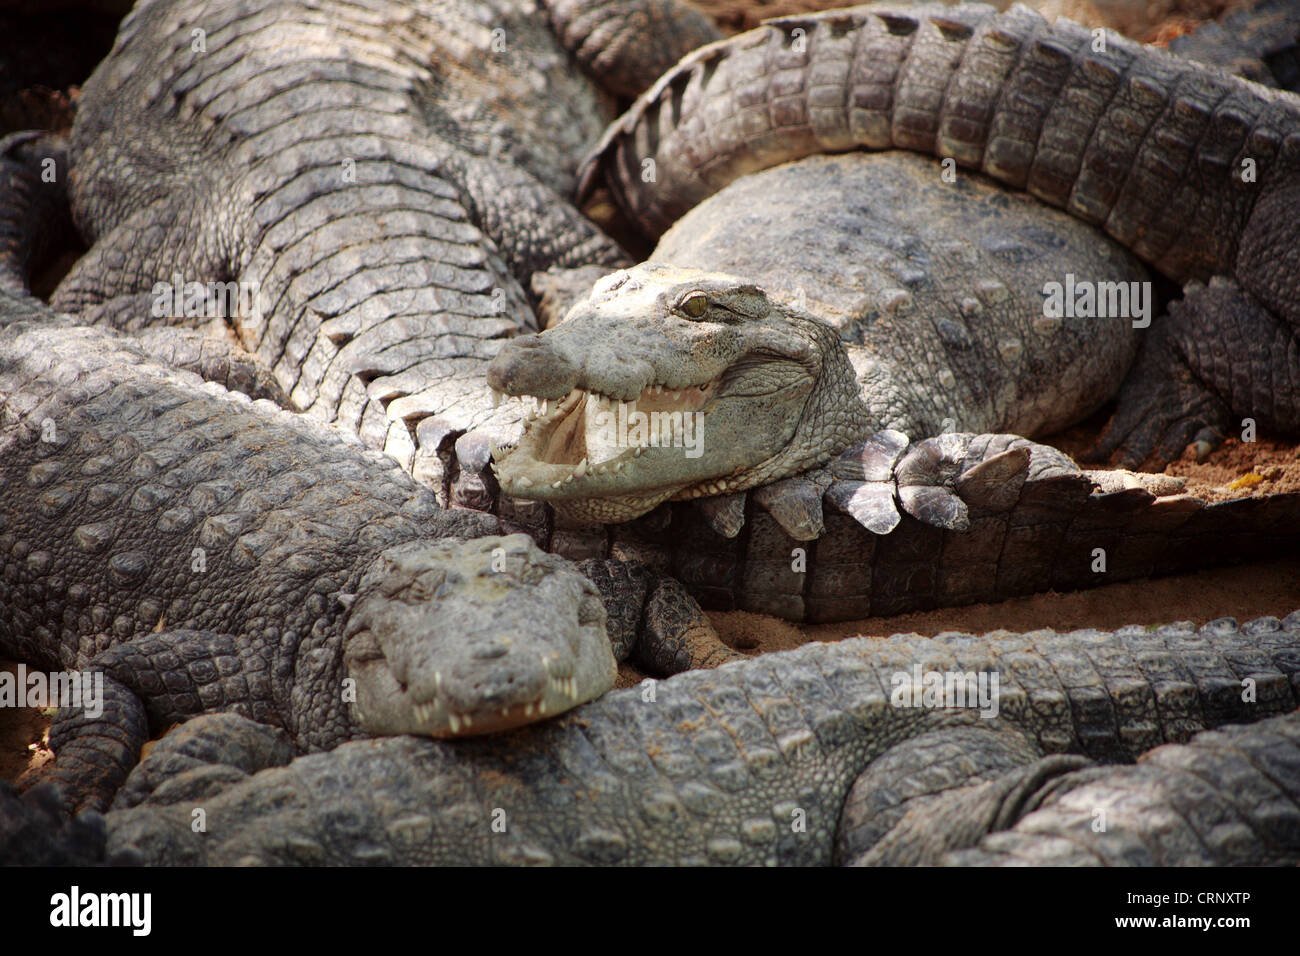 Group of Mugger crocodiles or marsh crocodiles, Crocodylus palustris. Stock Photo